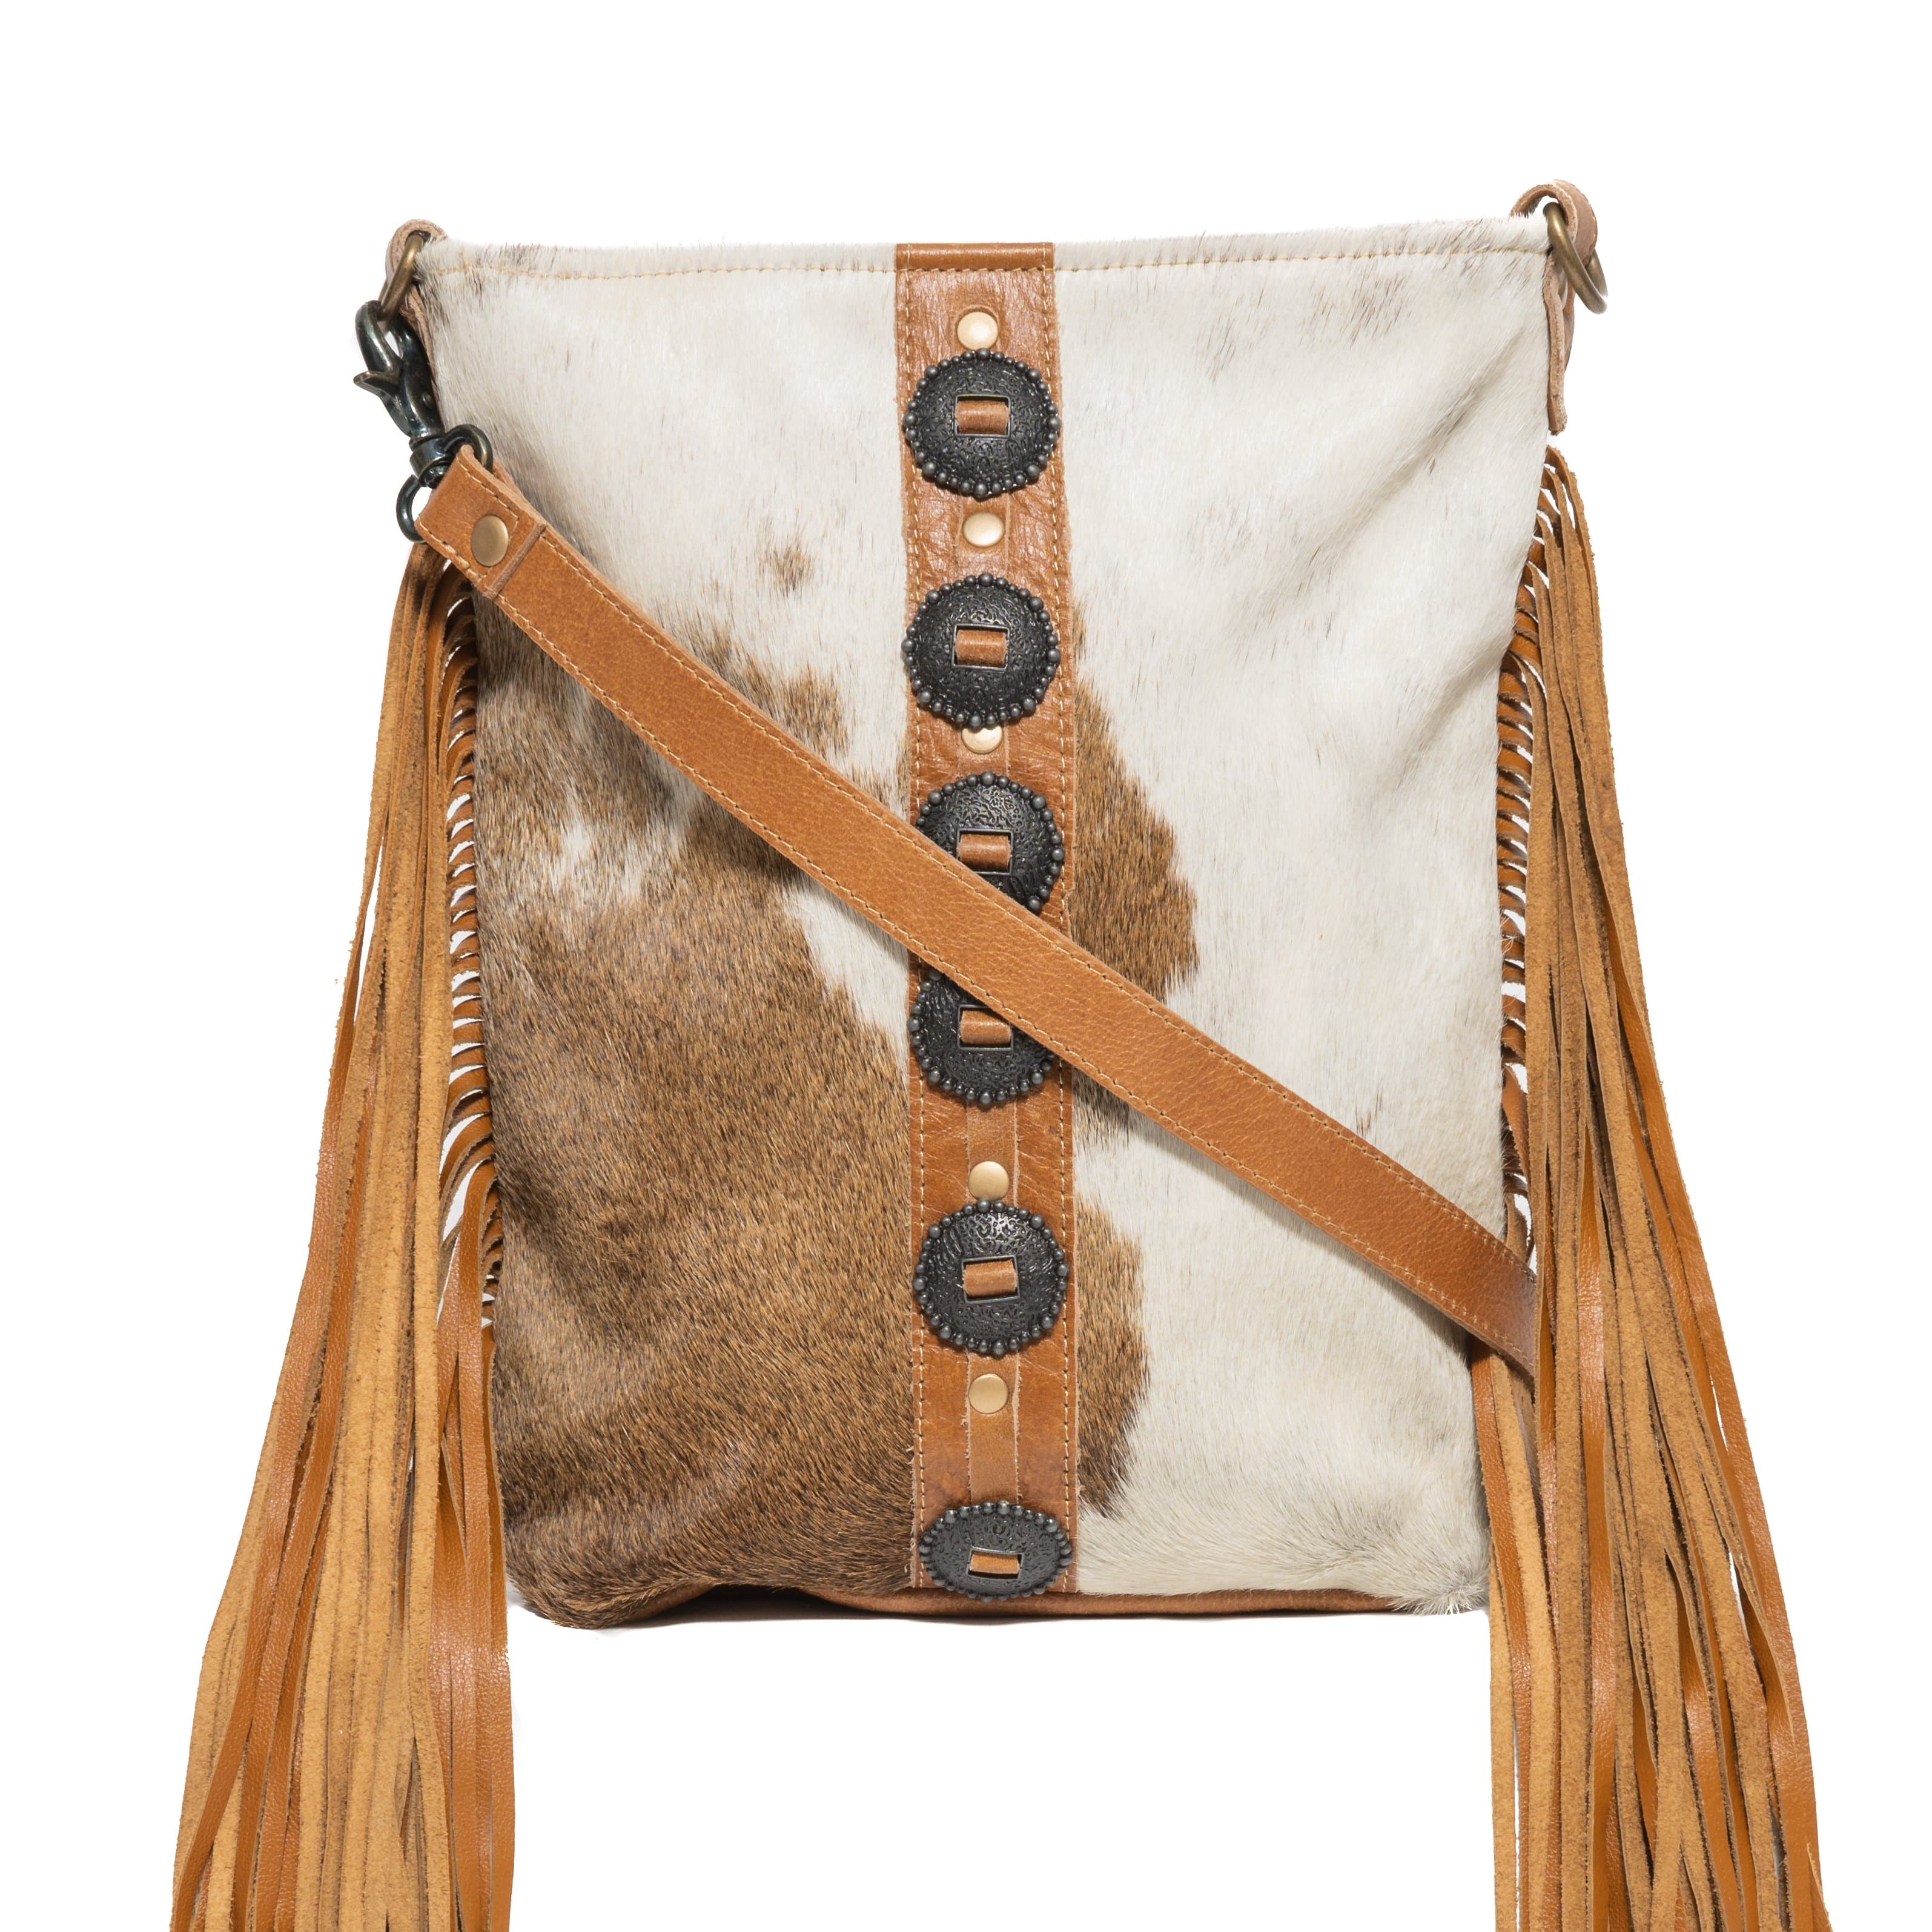 Myra Bag, Bags, New Western Cowhide Embossed Leather Crossbody Handbag  Adjustable Shoulder Strap